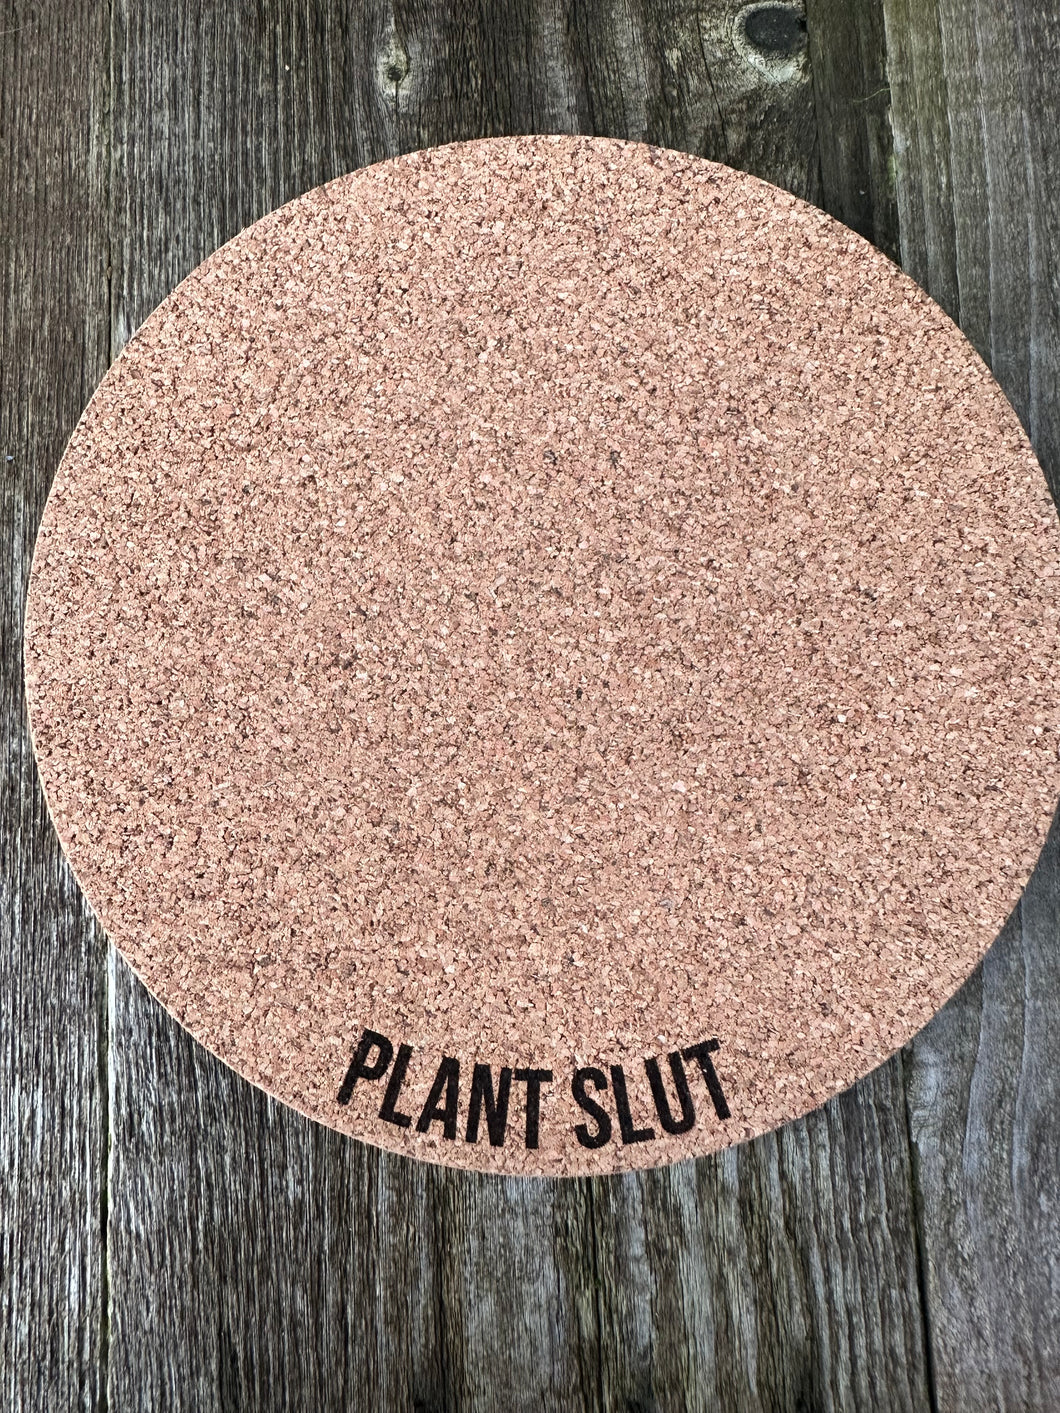 Plant Slut Cork Plant Mat - Engraved Cork Round - Cork Bottom - No Plastic or Rubber - All Natural Material